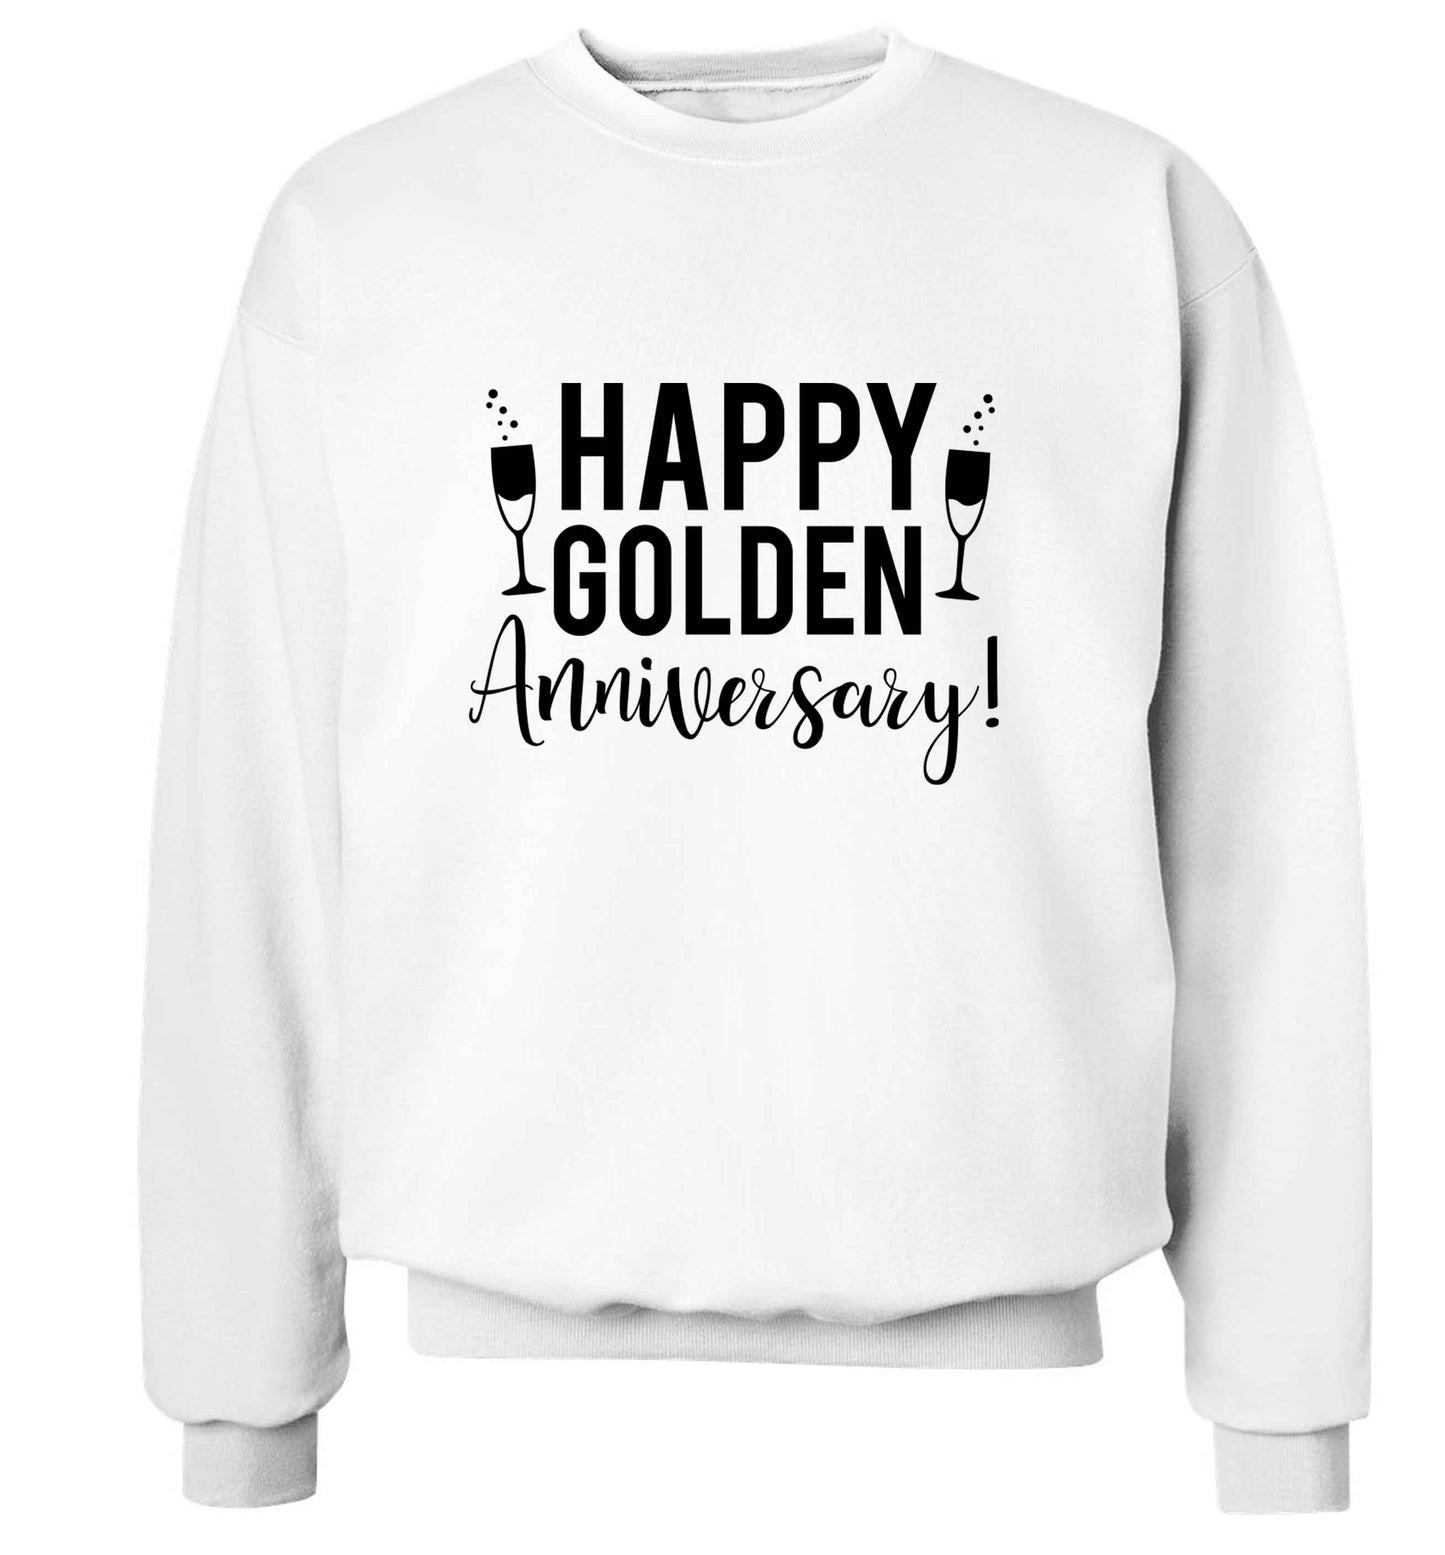 Happy golden anniversary! adult's unisex white sweater 2XL